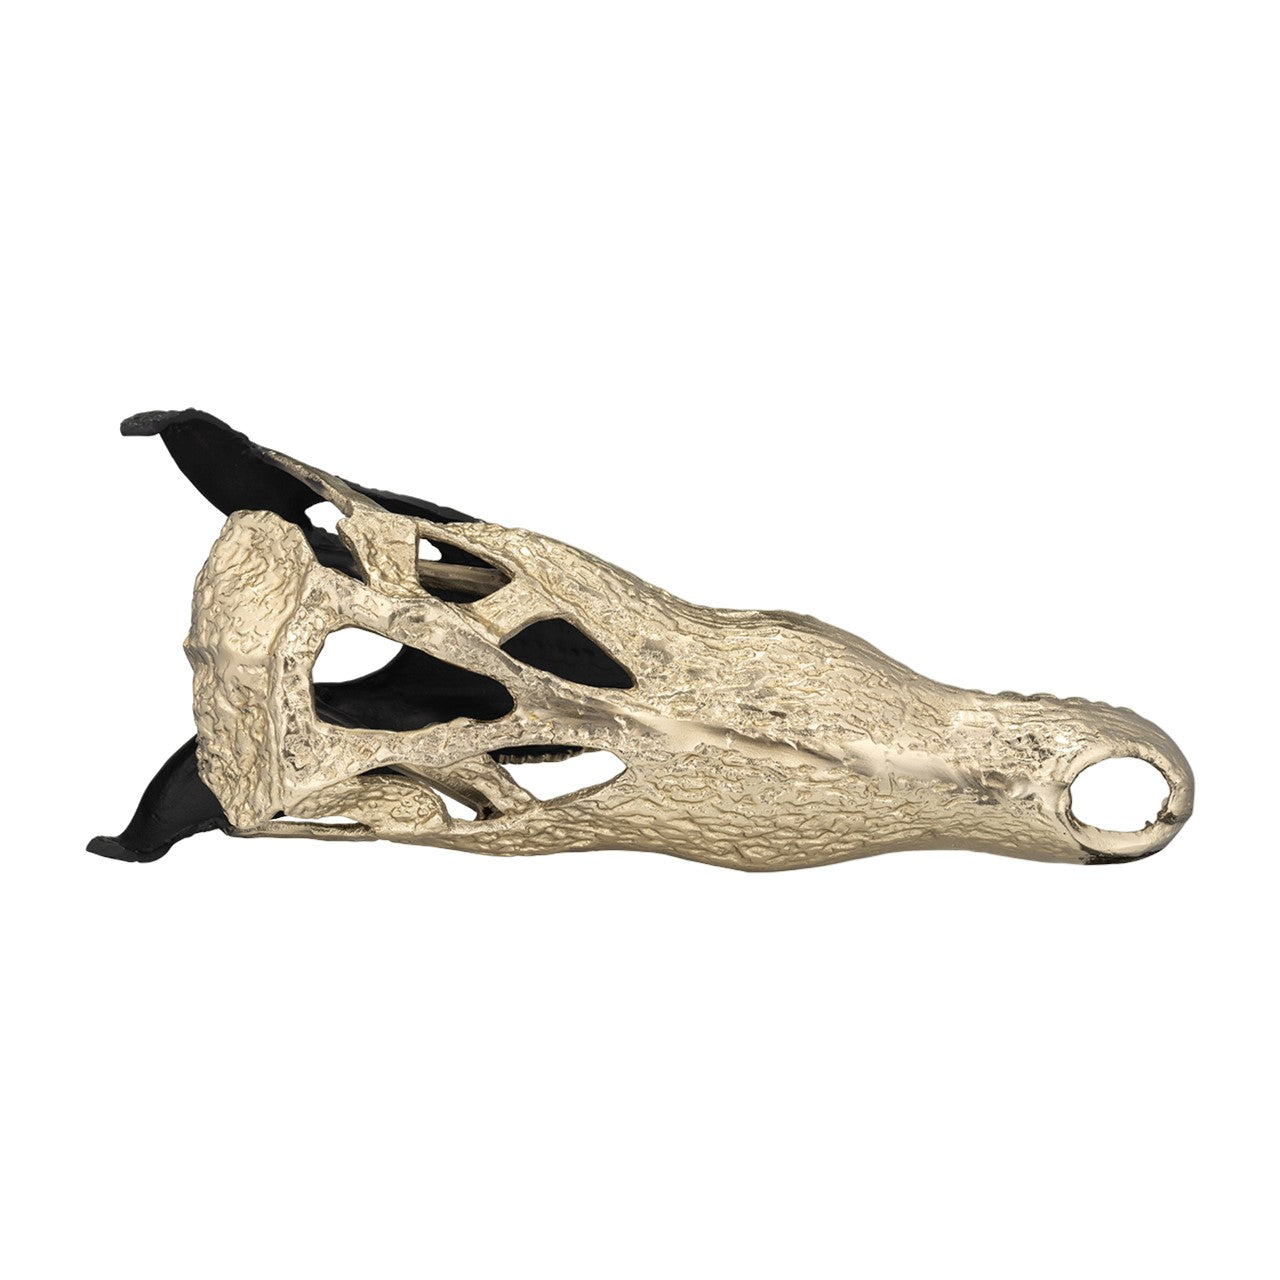 Picture of Alligator Skull Metal Sculpture, Gold